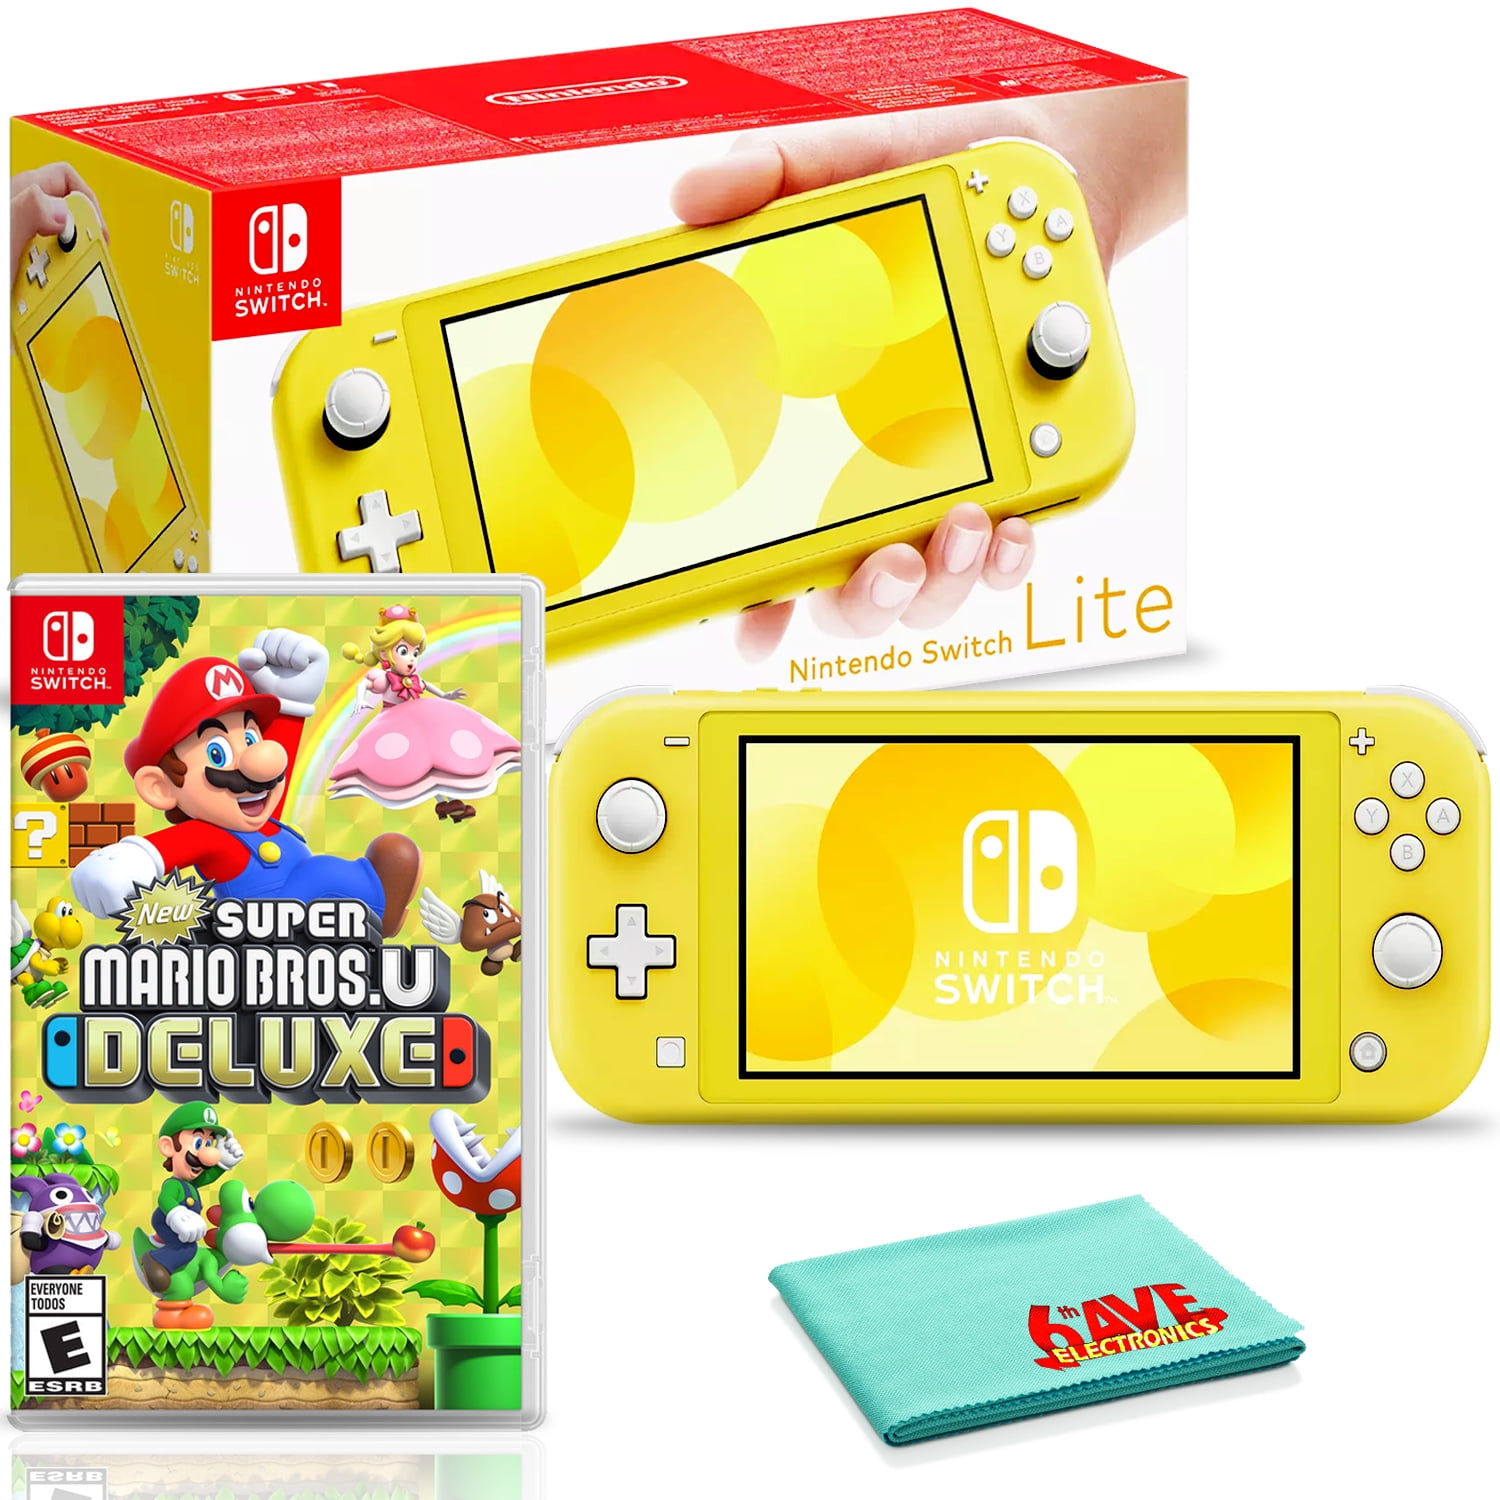 Nintendo Switch Lite (Yellow) Bundle with Super Mario Bros. U and